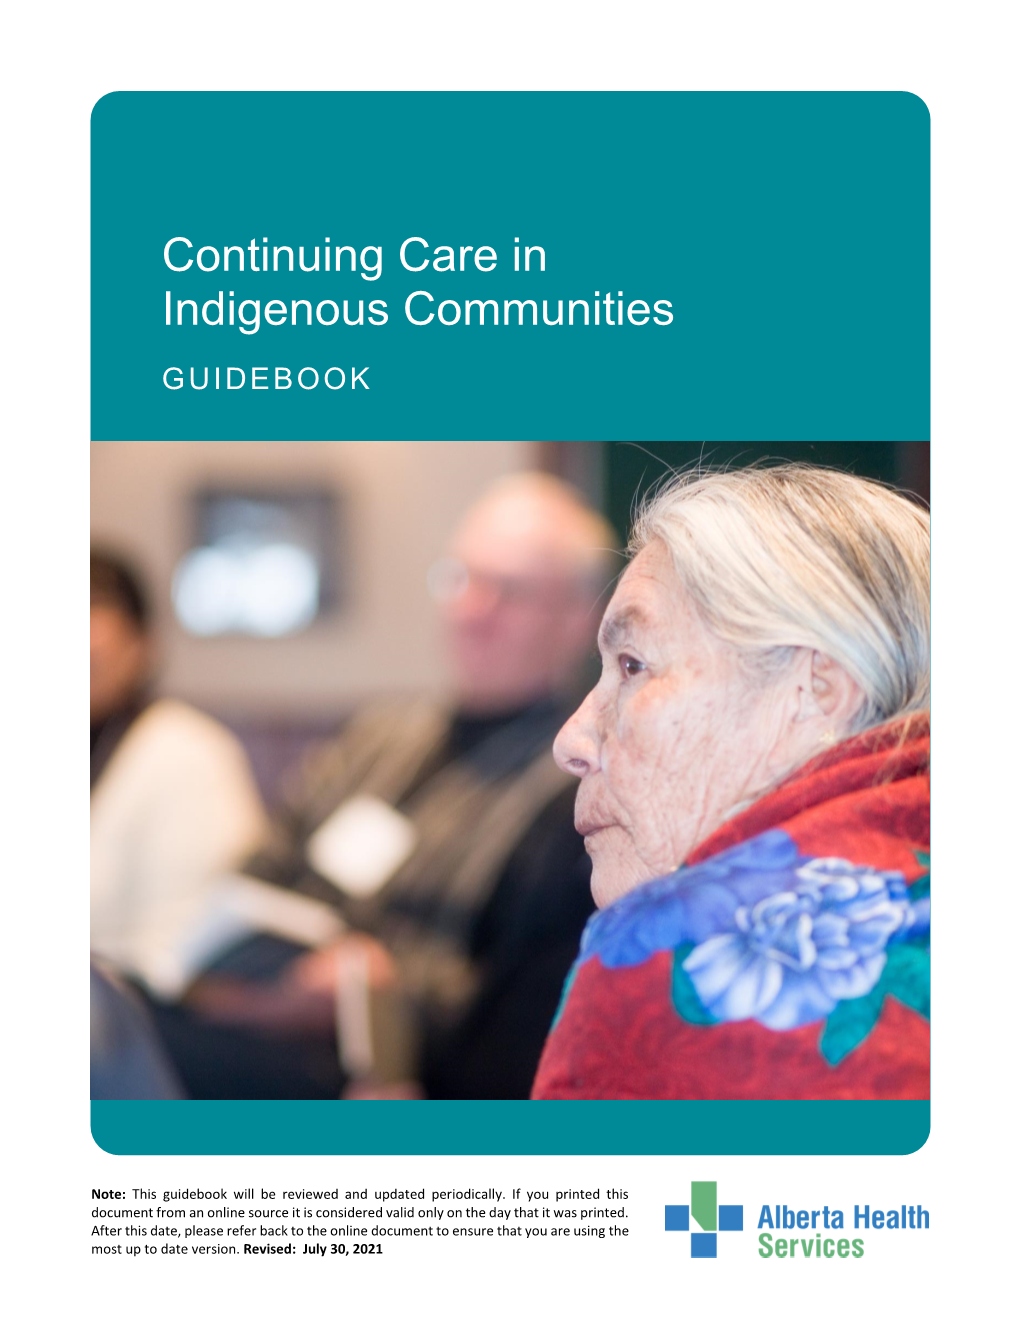 Continuing Care in Indigenous Communities Guidebook